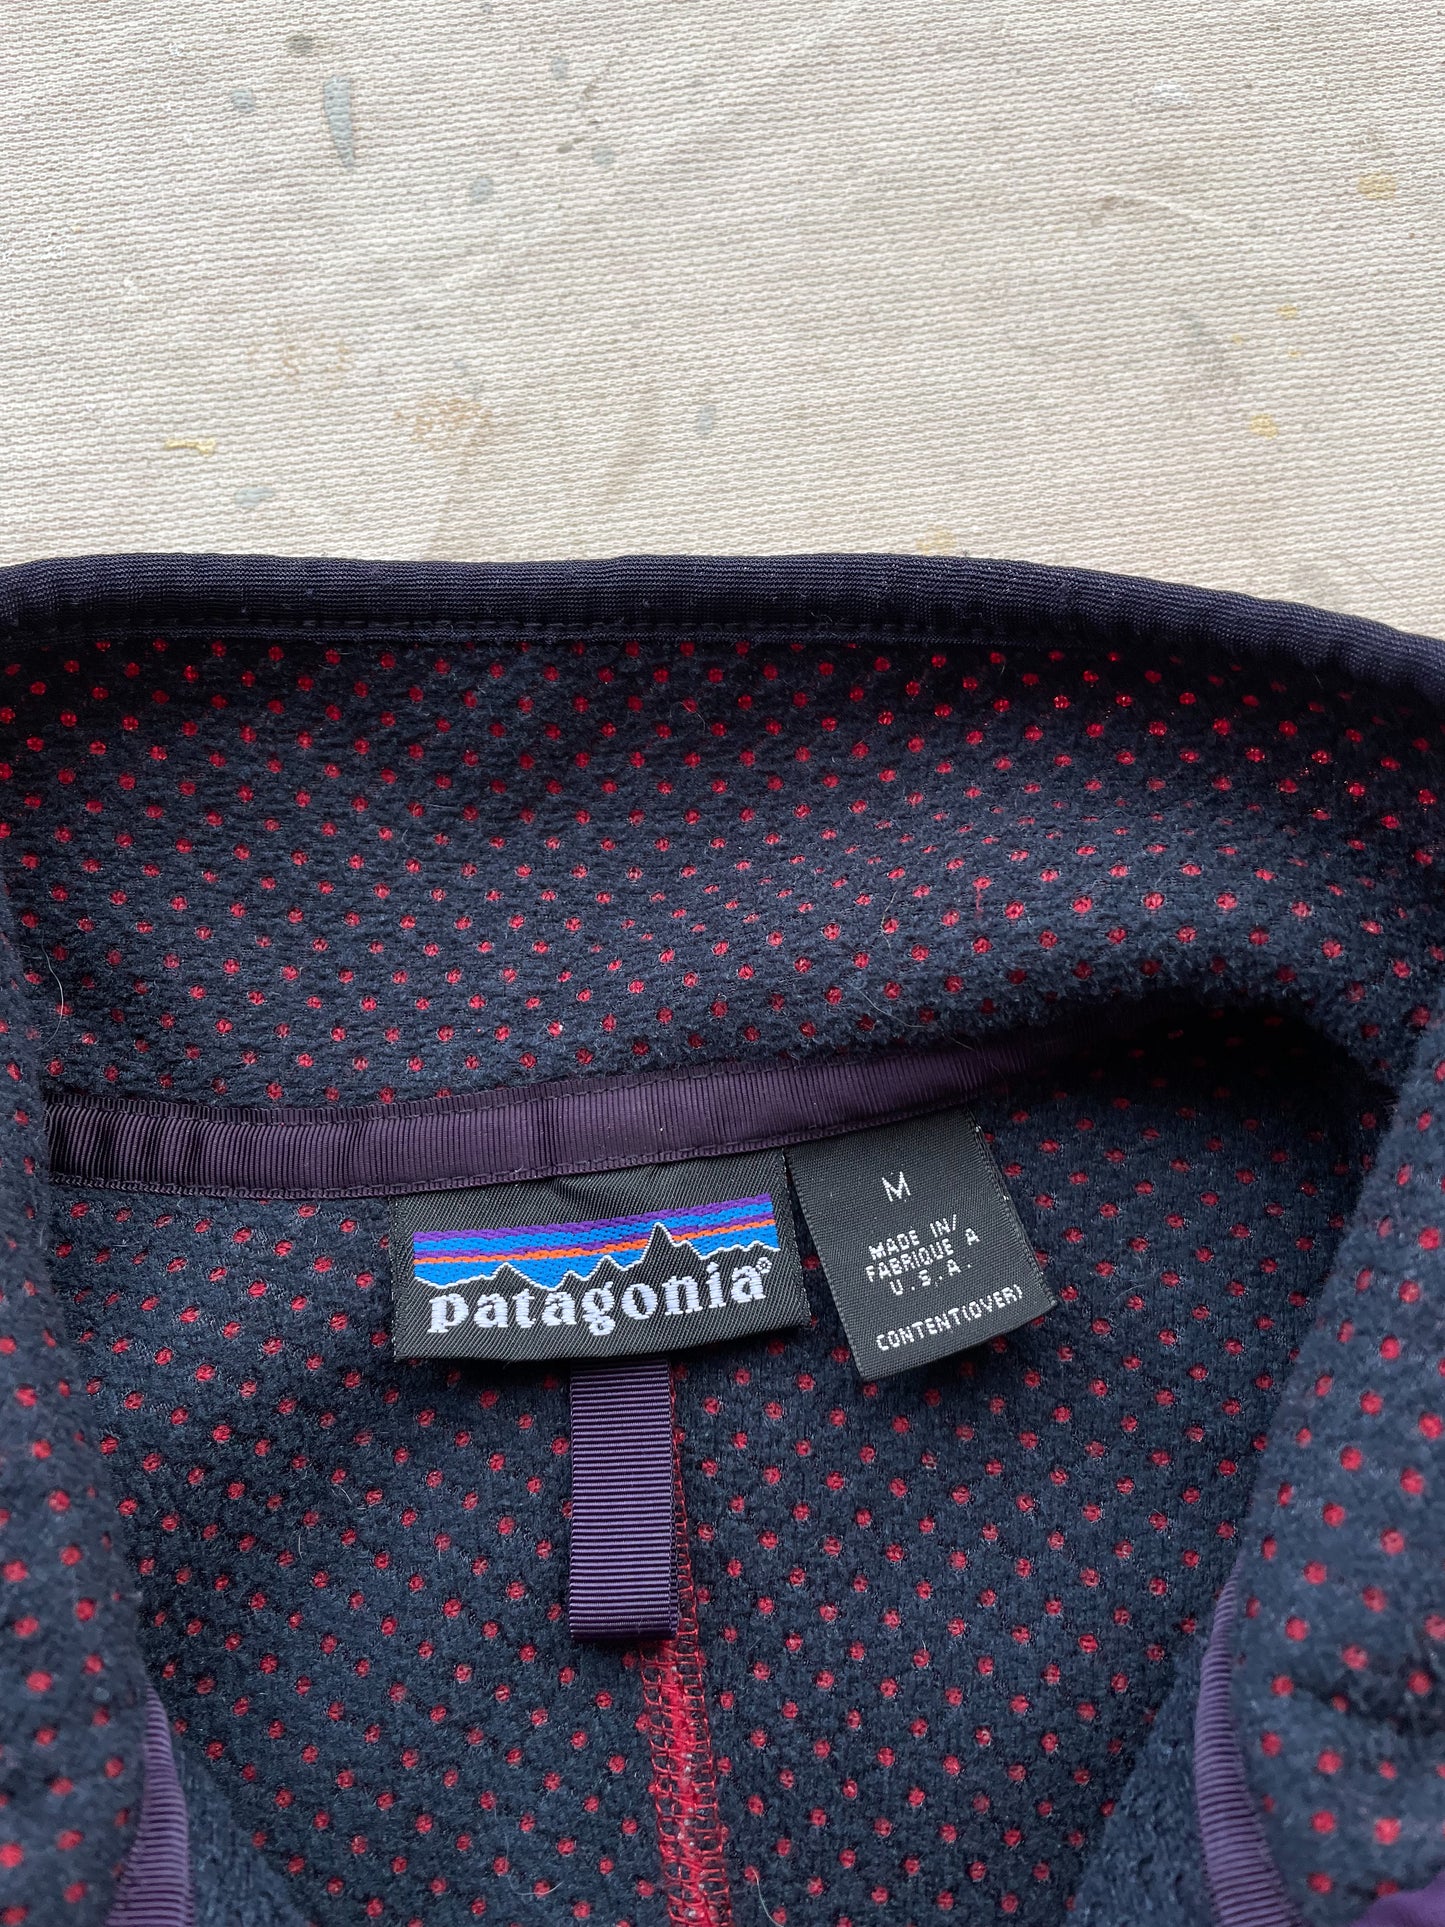 Patagonia Deep Pile Fleece Jacket—[M]